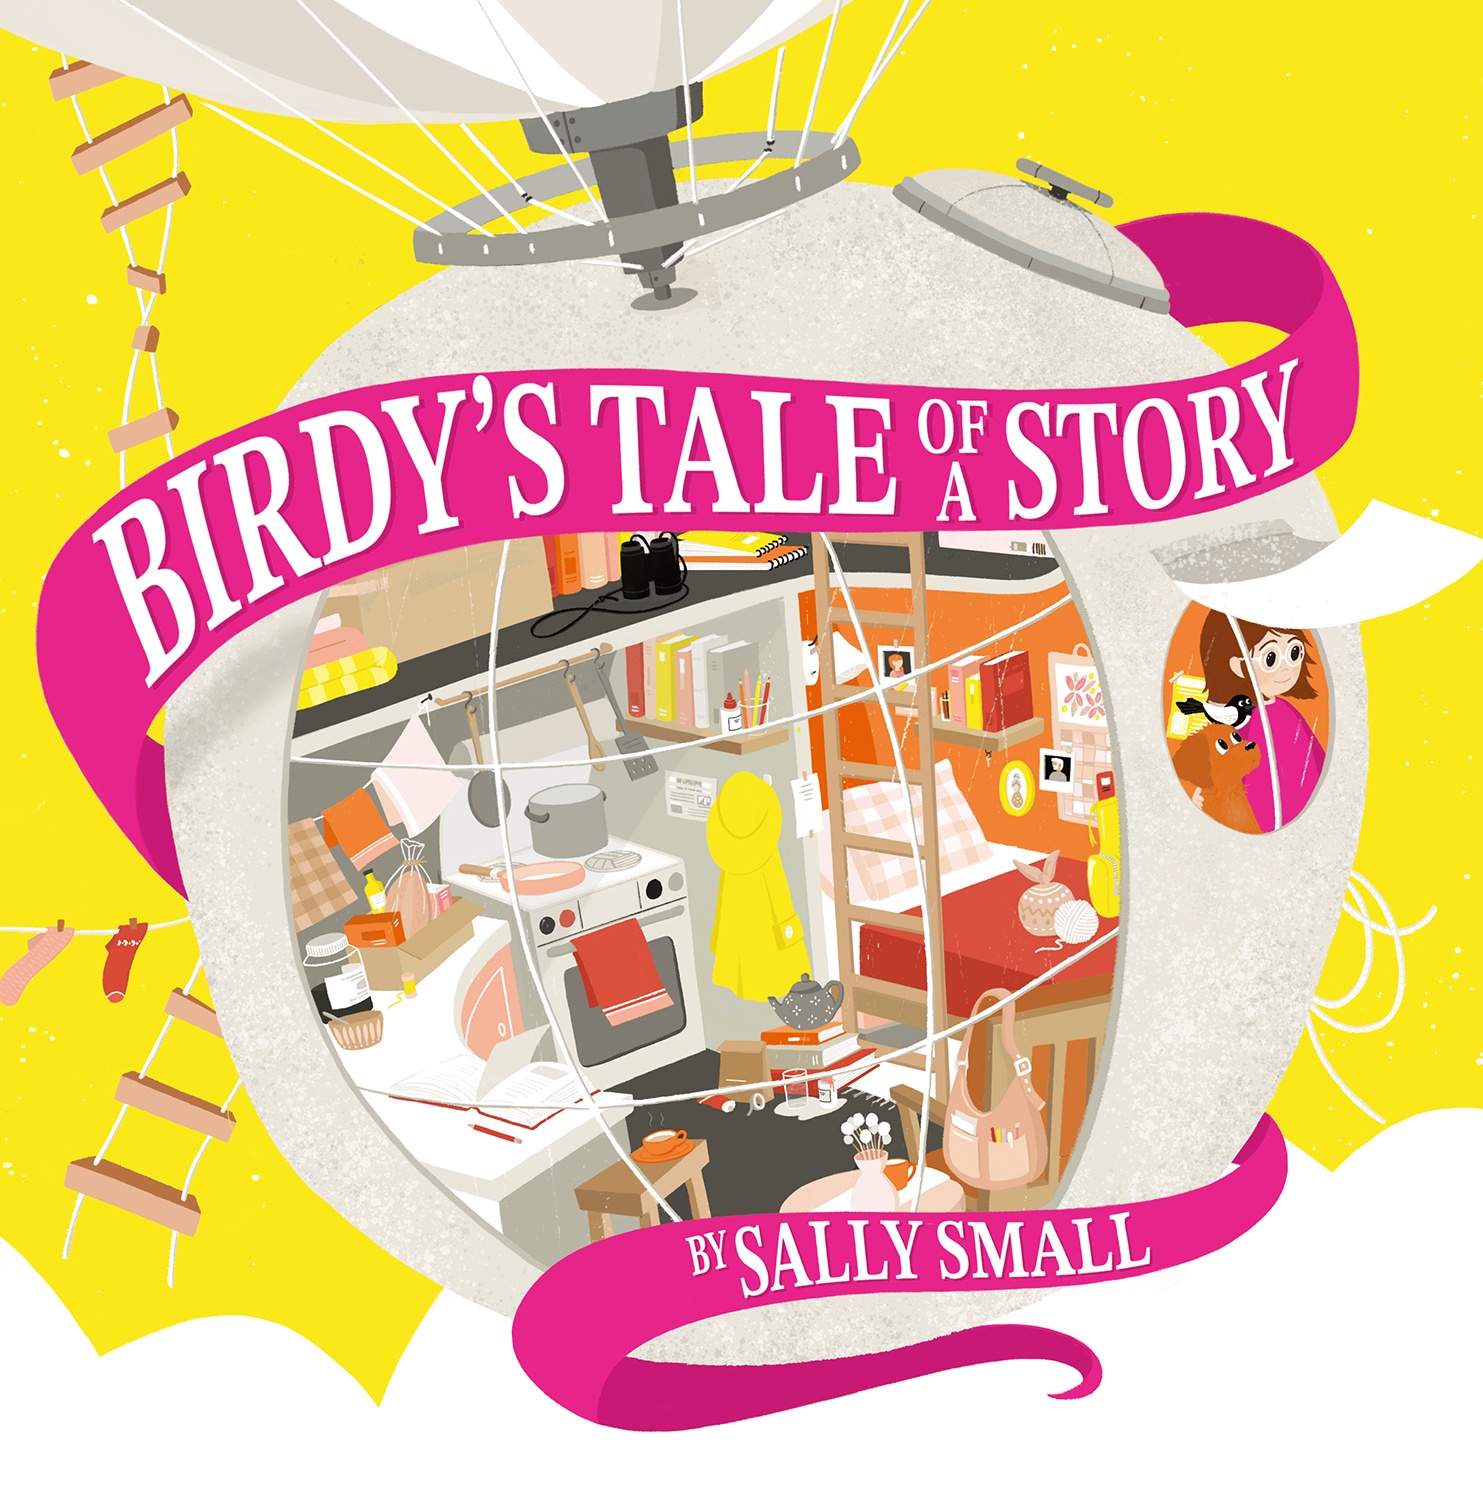 Birdy’s Tale of a Story